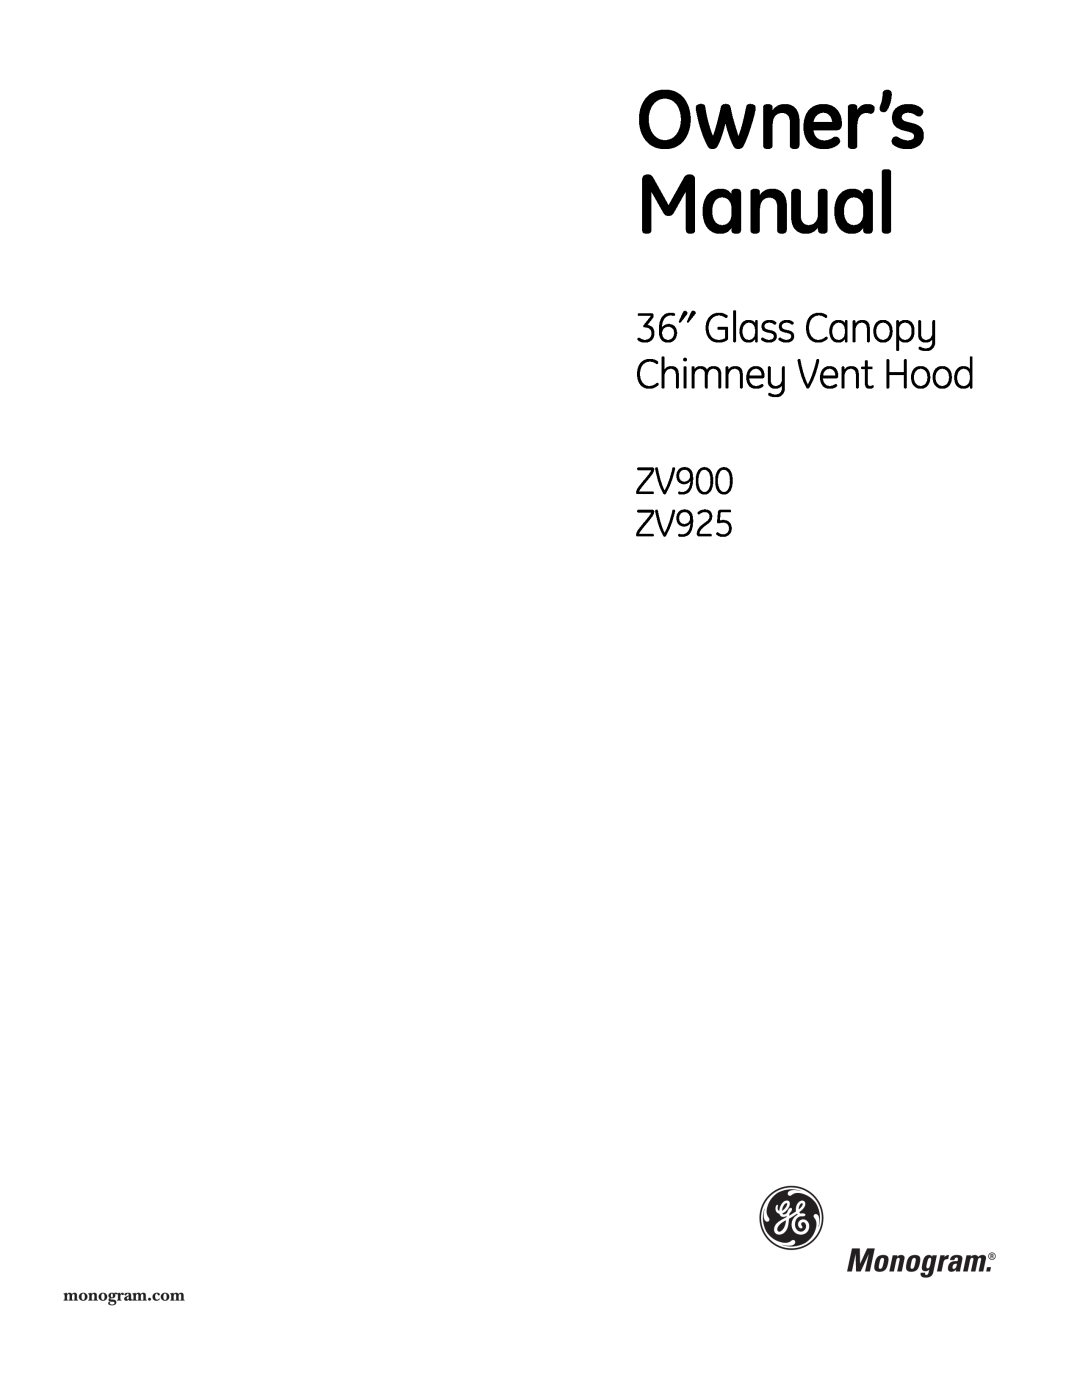 GE Monogram owner manual Owner’s Manual, 36″ Glass Canopy Chimney Vent Hood ZV900 ZV925 